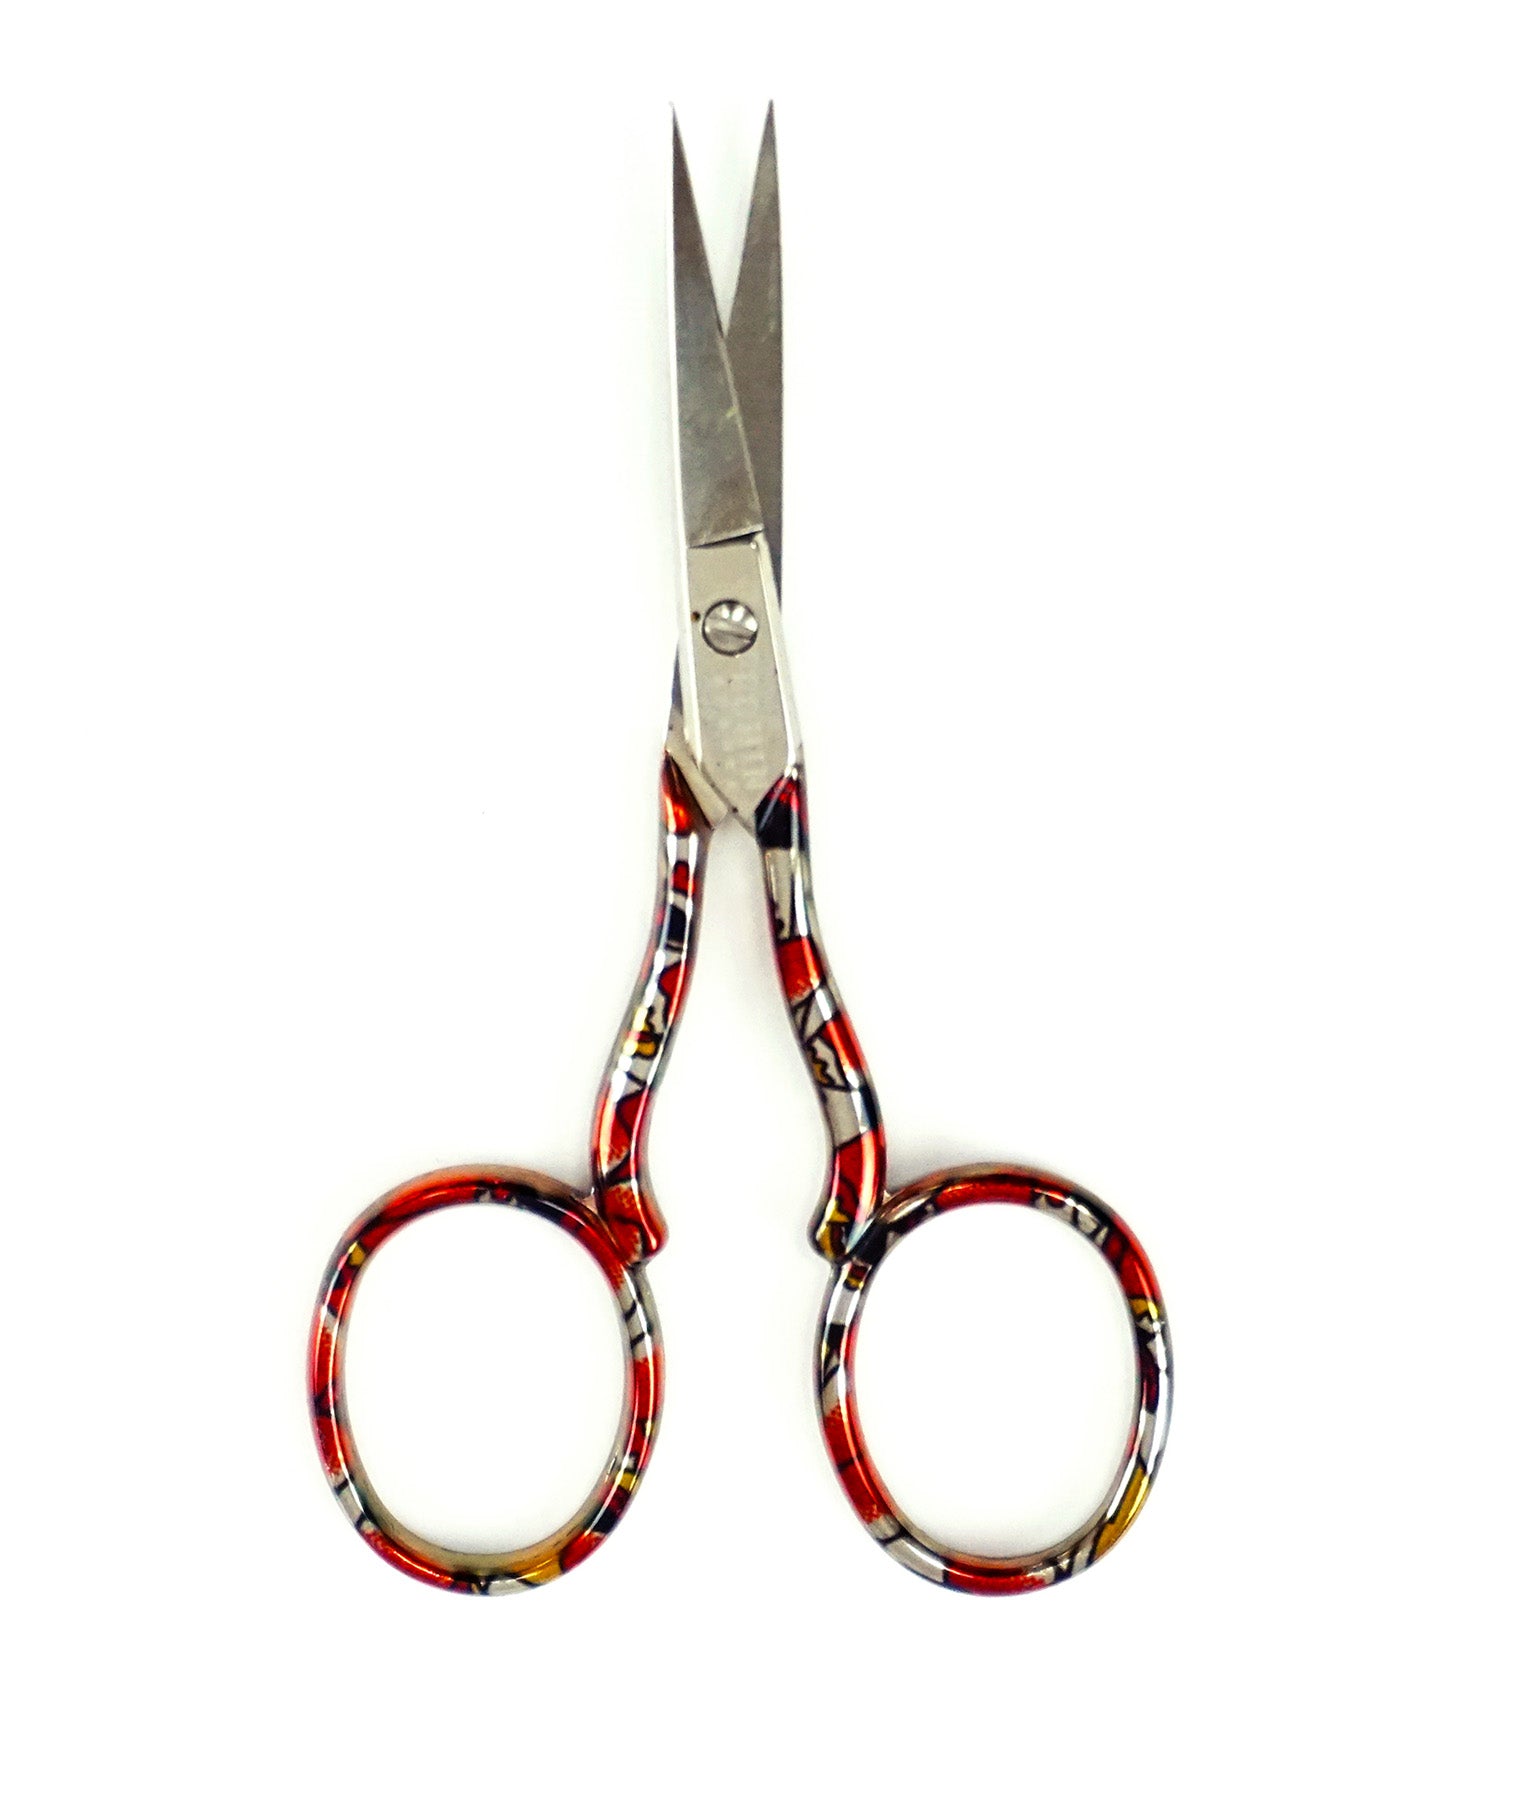 Bohin ~ Giakarta Marbleized French Embroidery Scissors for